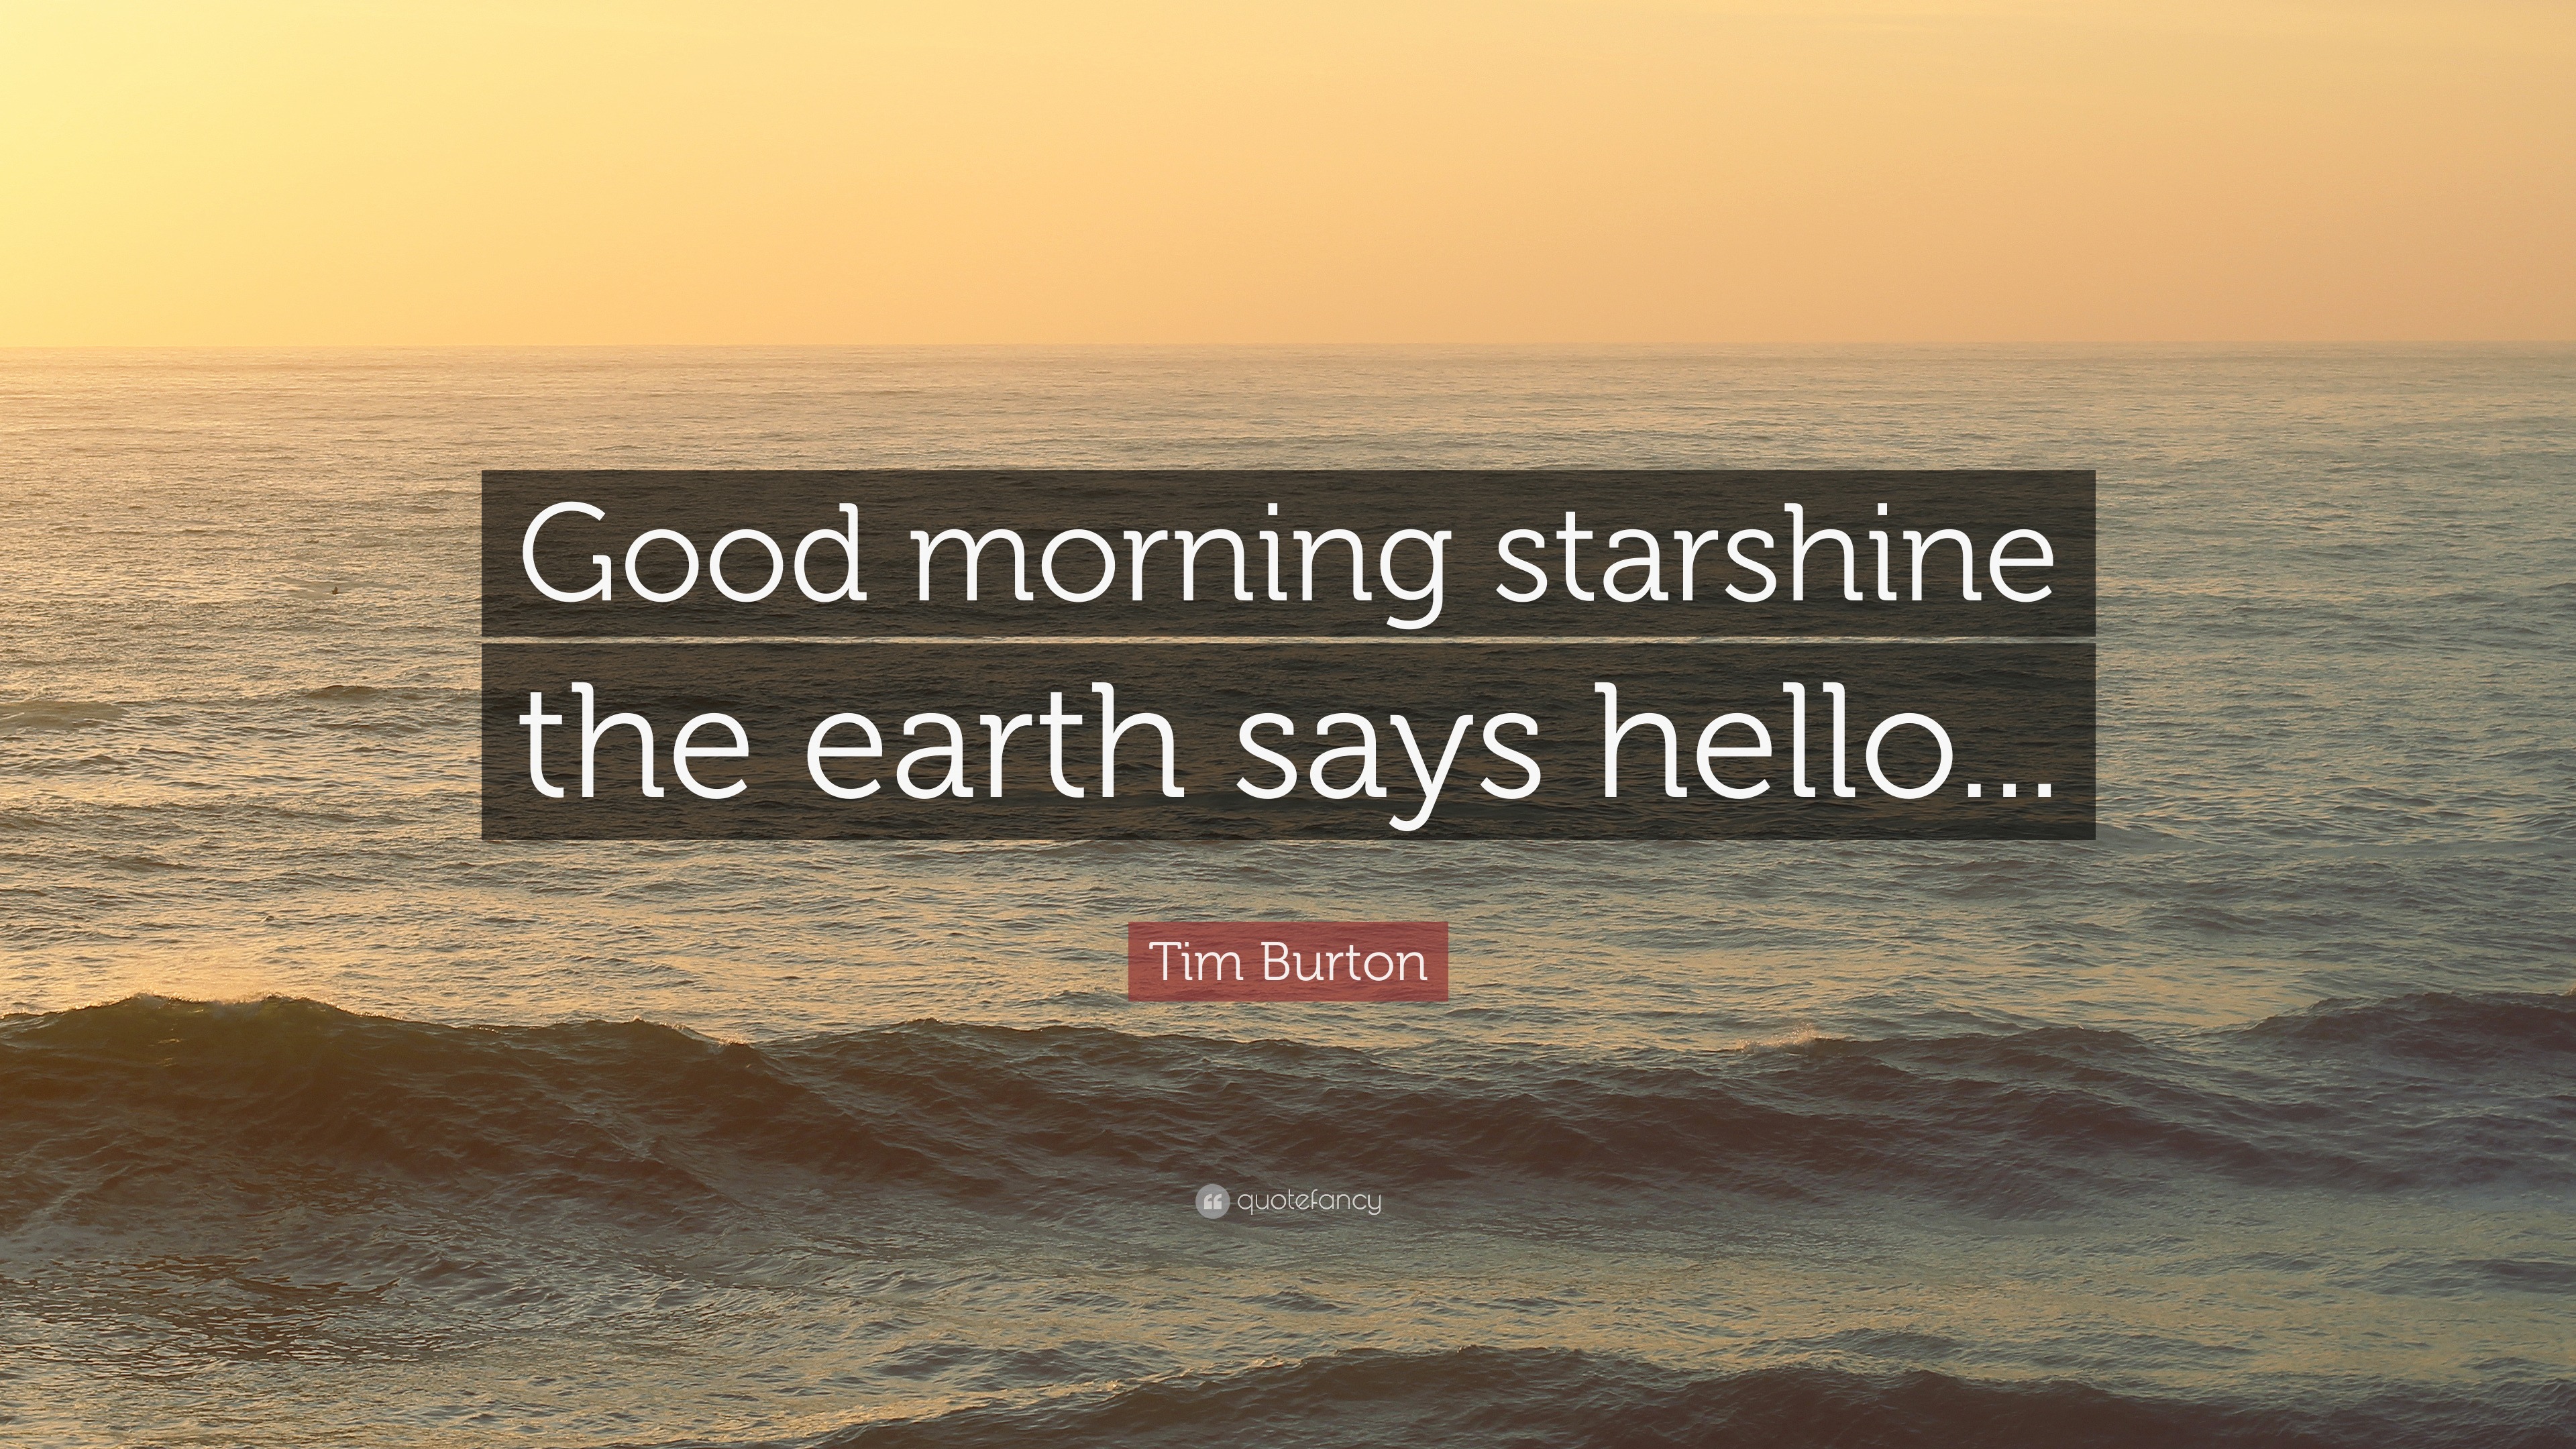 Tim Burton Quote: "Good morning starshine the earth says ...